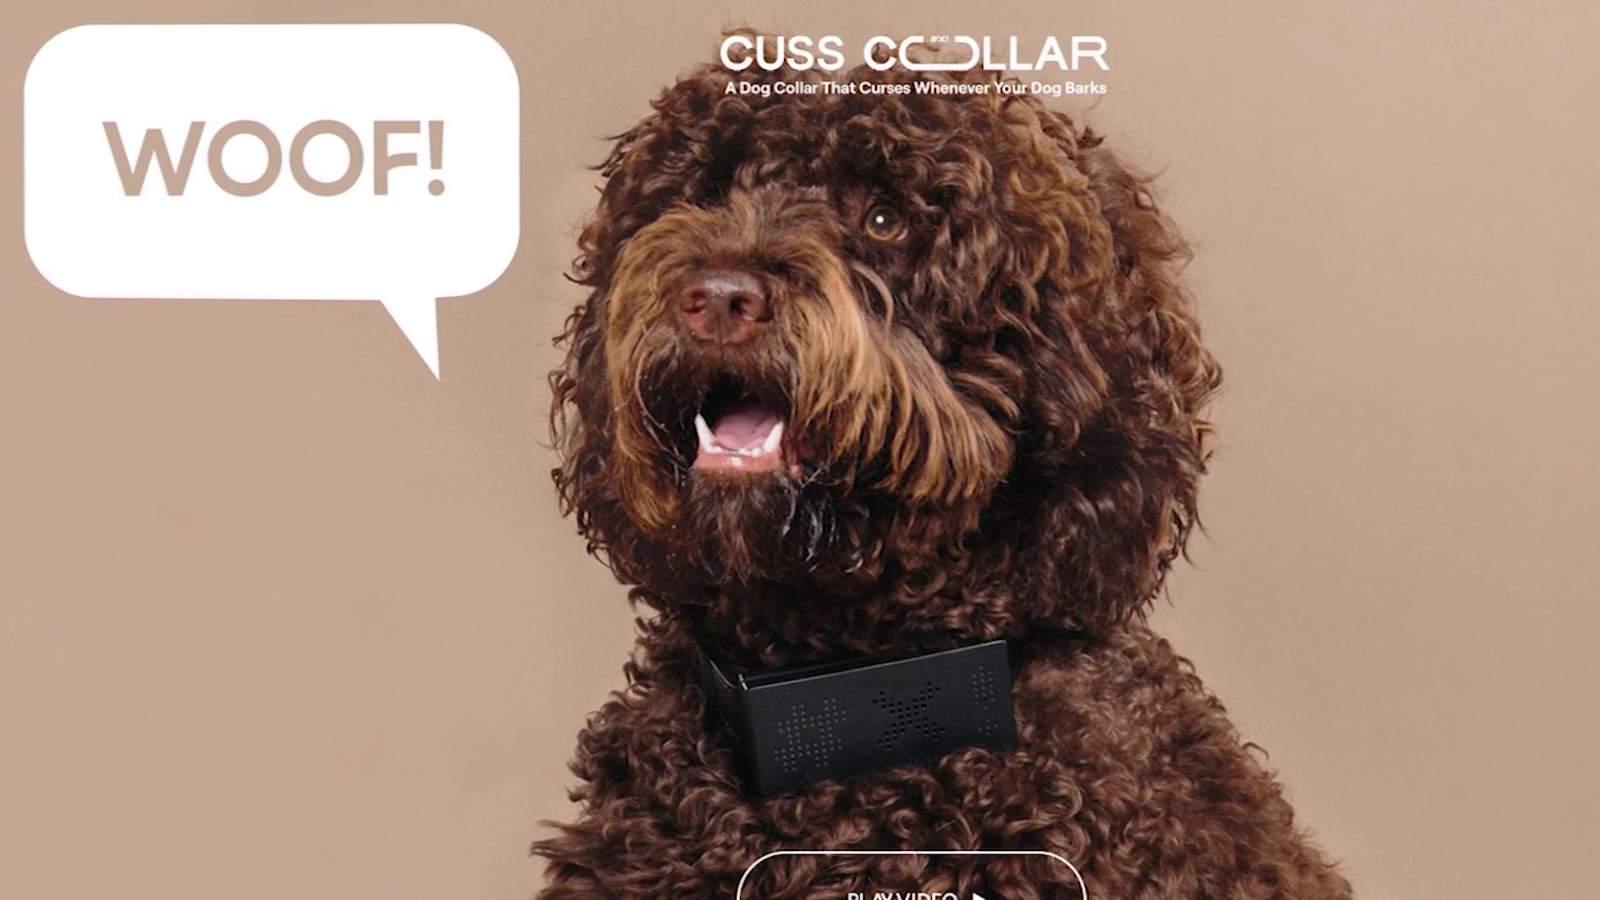 Dog collar turns barks into curse words